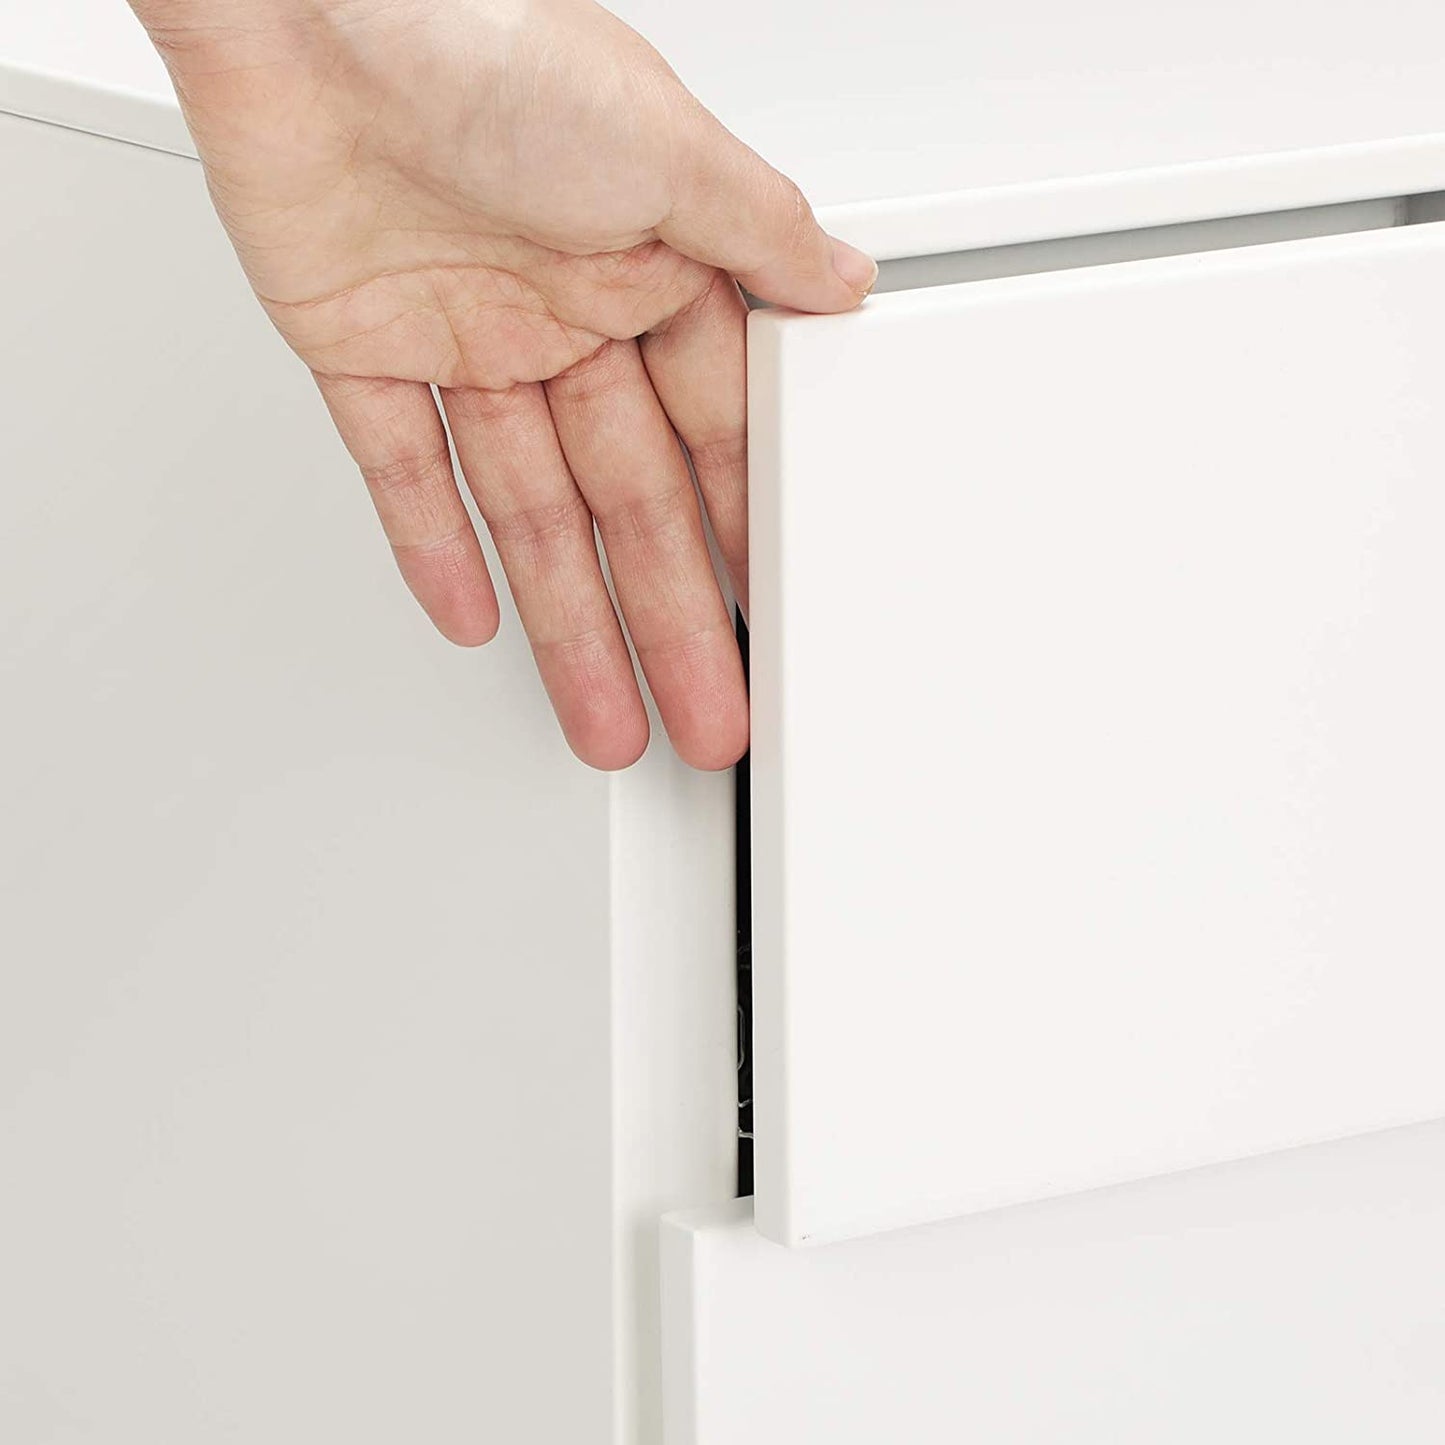 Nancy's Hazelton Drawer Unit - Filing Cabinet - On Wheels - Lock - 3 Drawers - White - Metal - 39 x 45 x 55 cm 